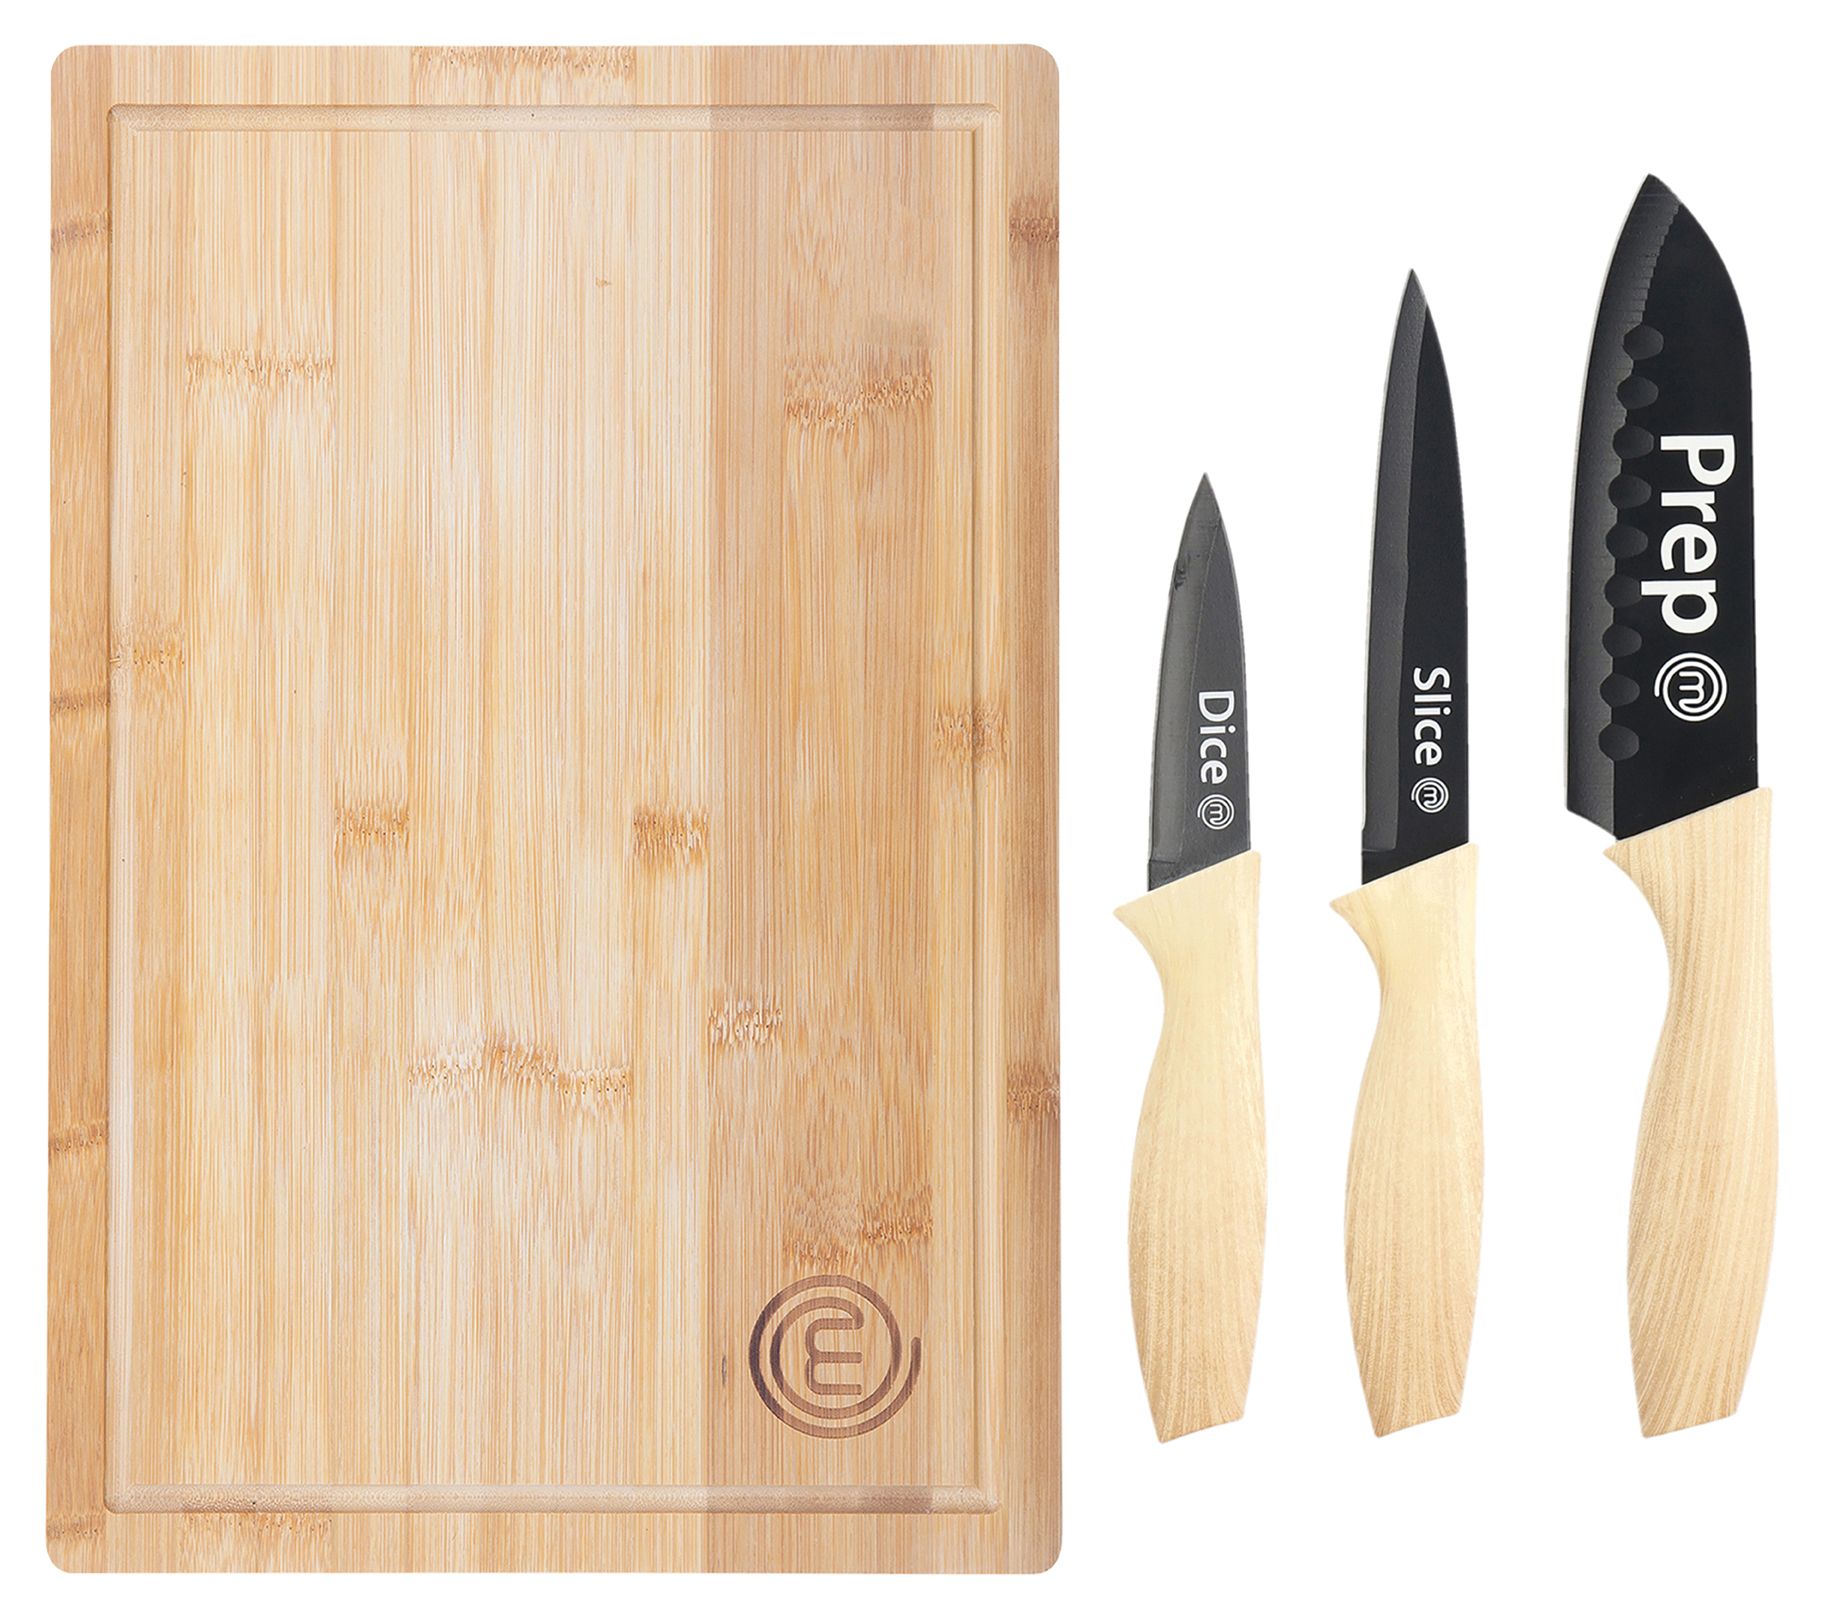 Tovla & Co. Knives for Kids 3-Piece Nylon Kitchen Baking Knife Set